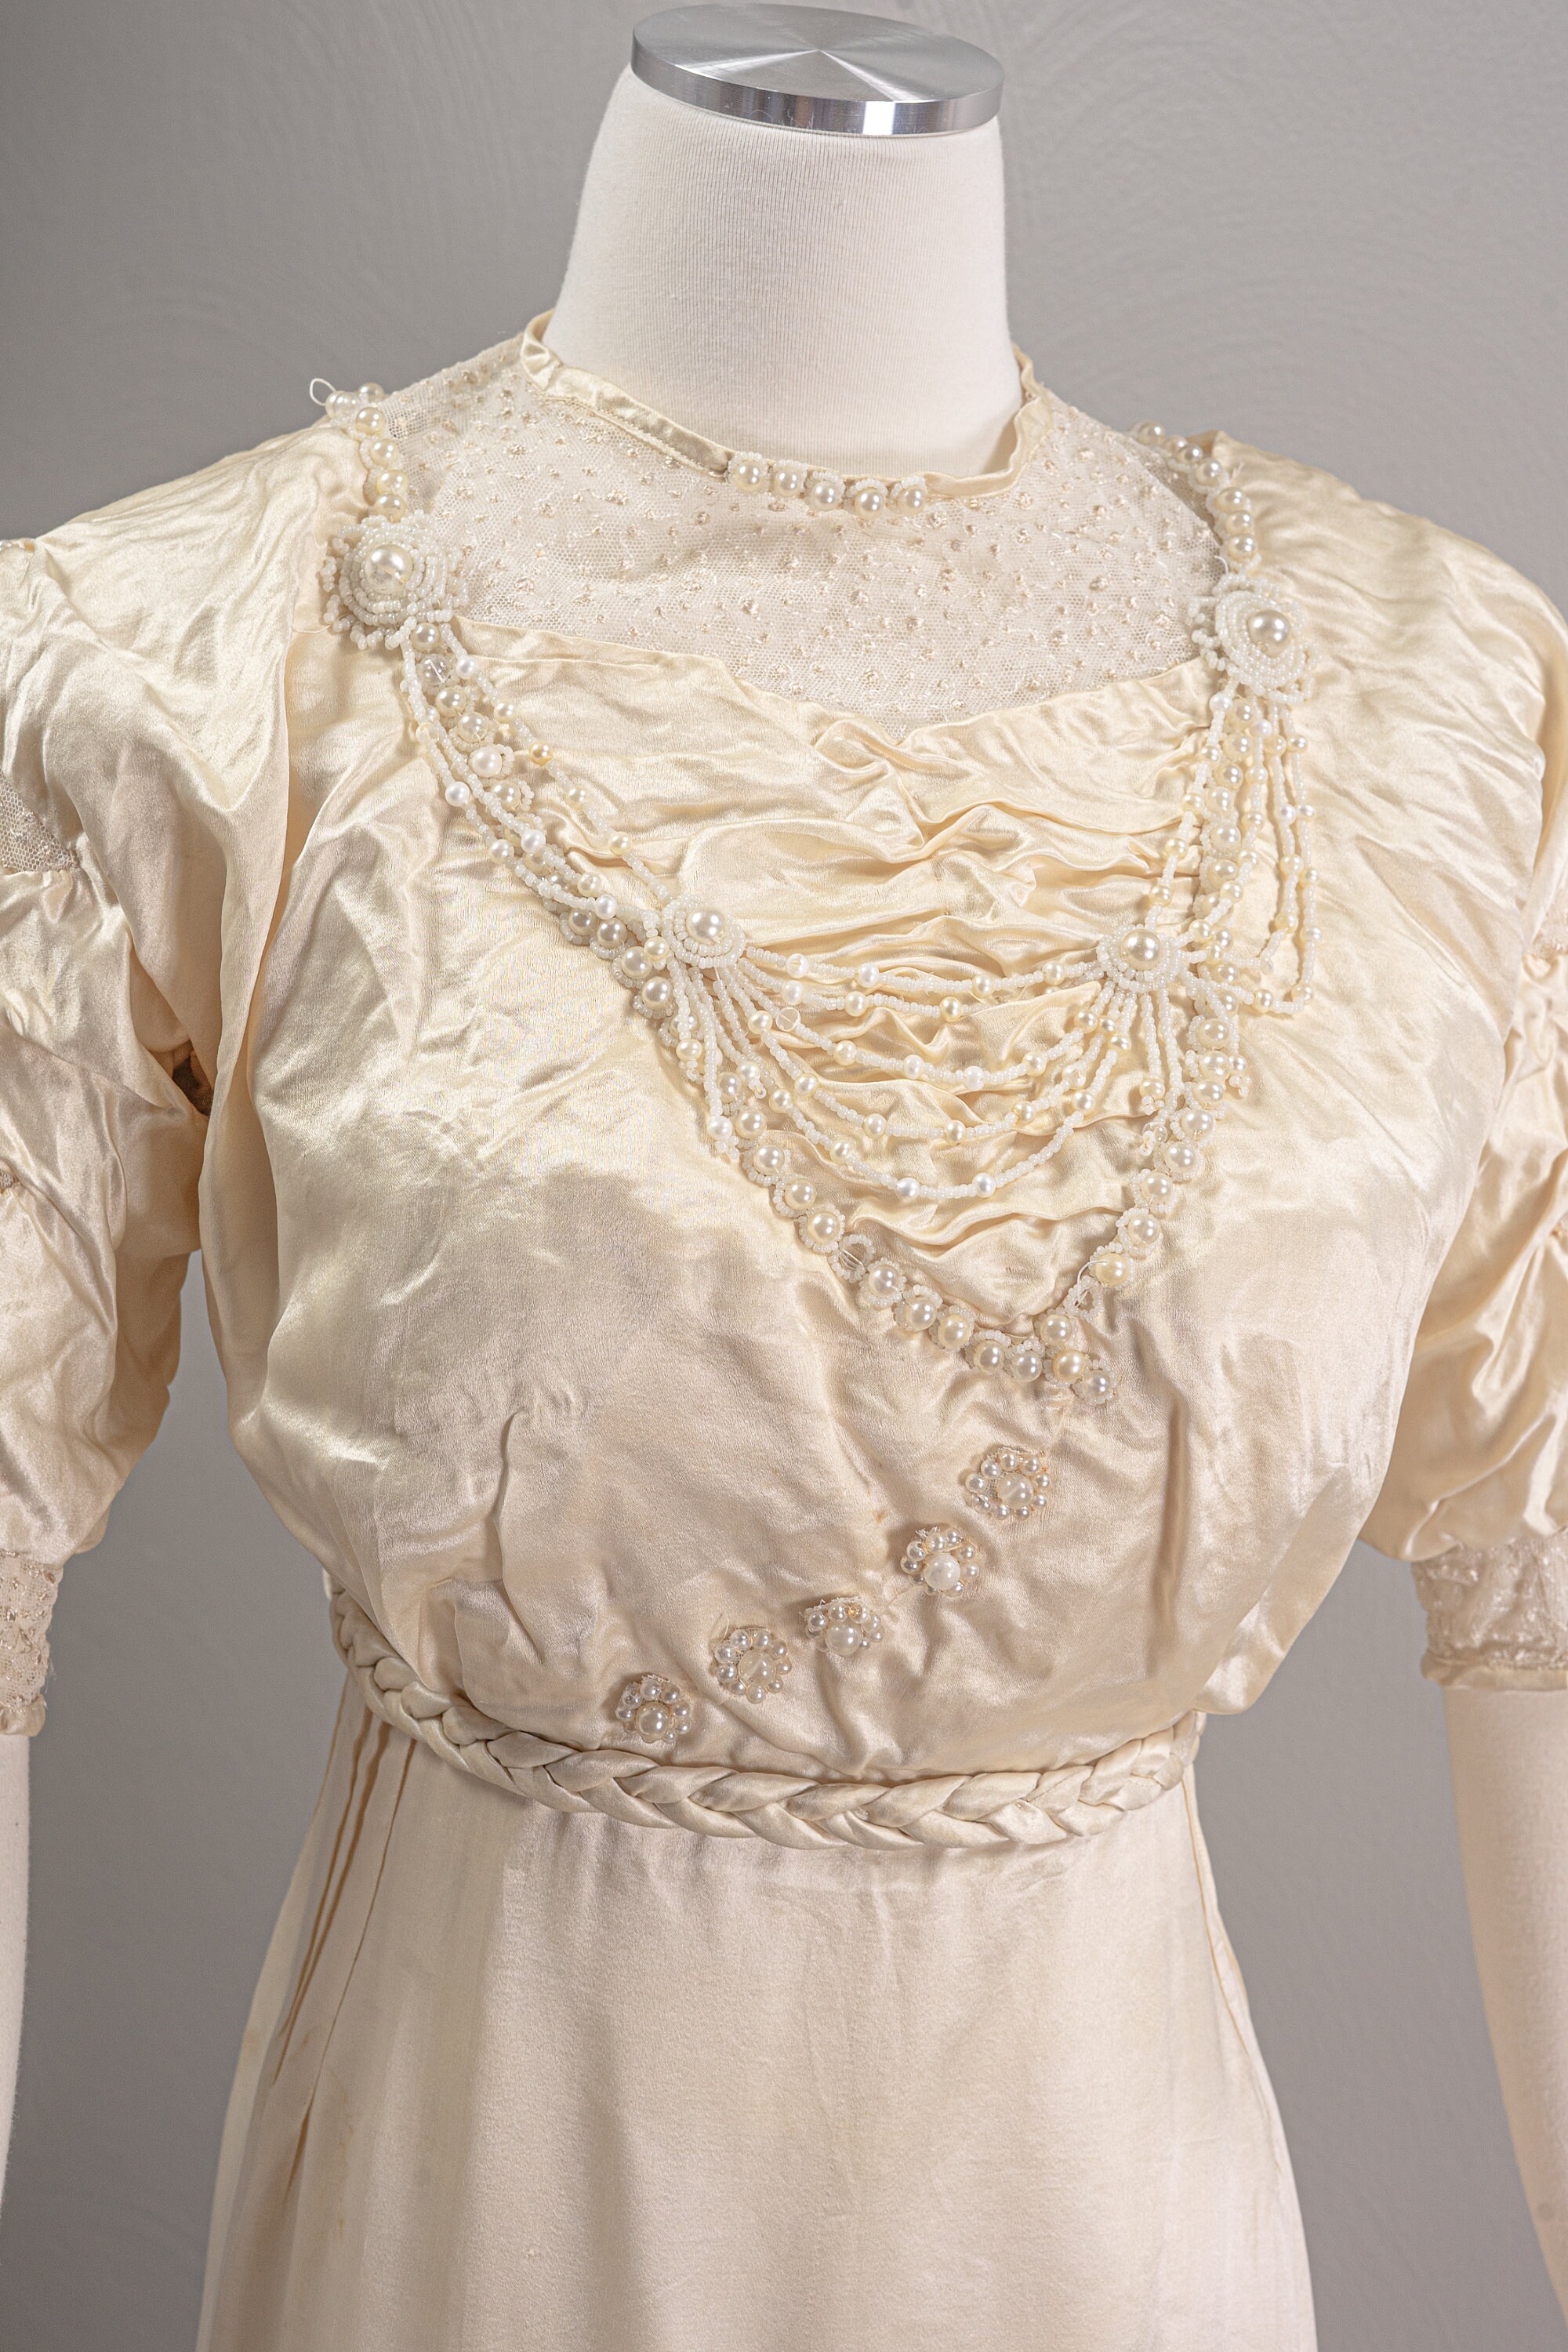 Stunning 1900s Edwardian Cream Silk Wedding Gown Wonderful | Etsy